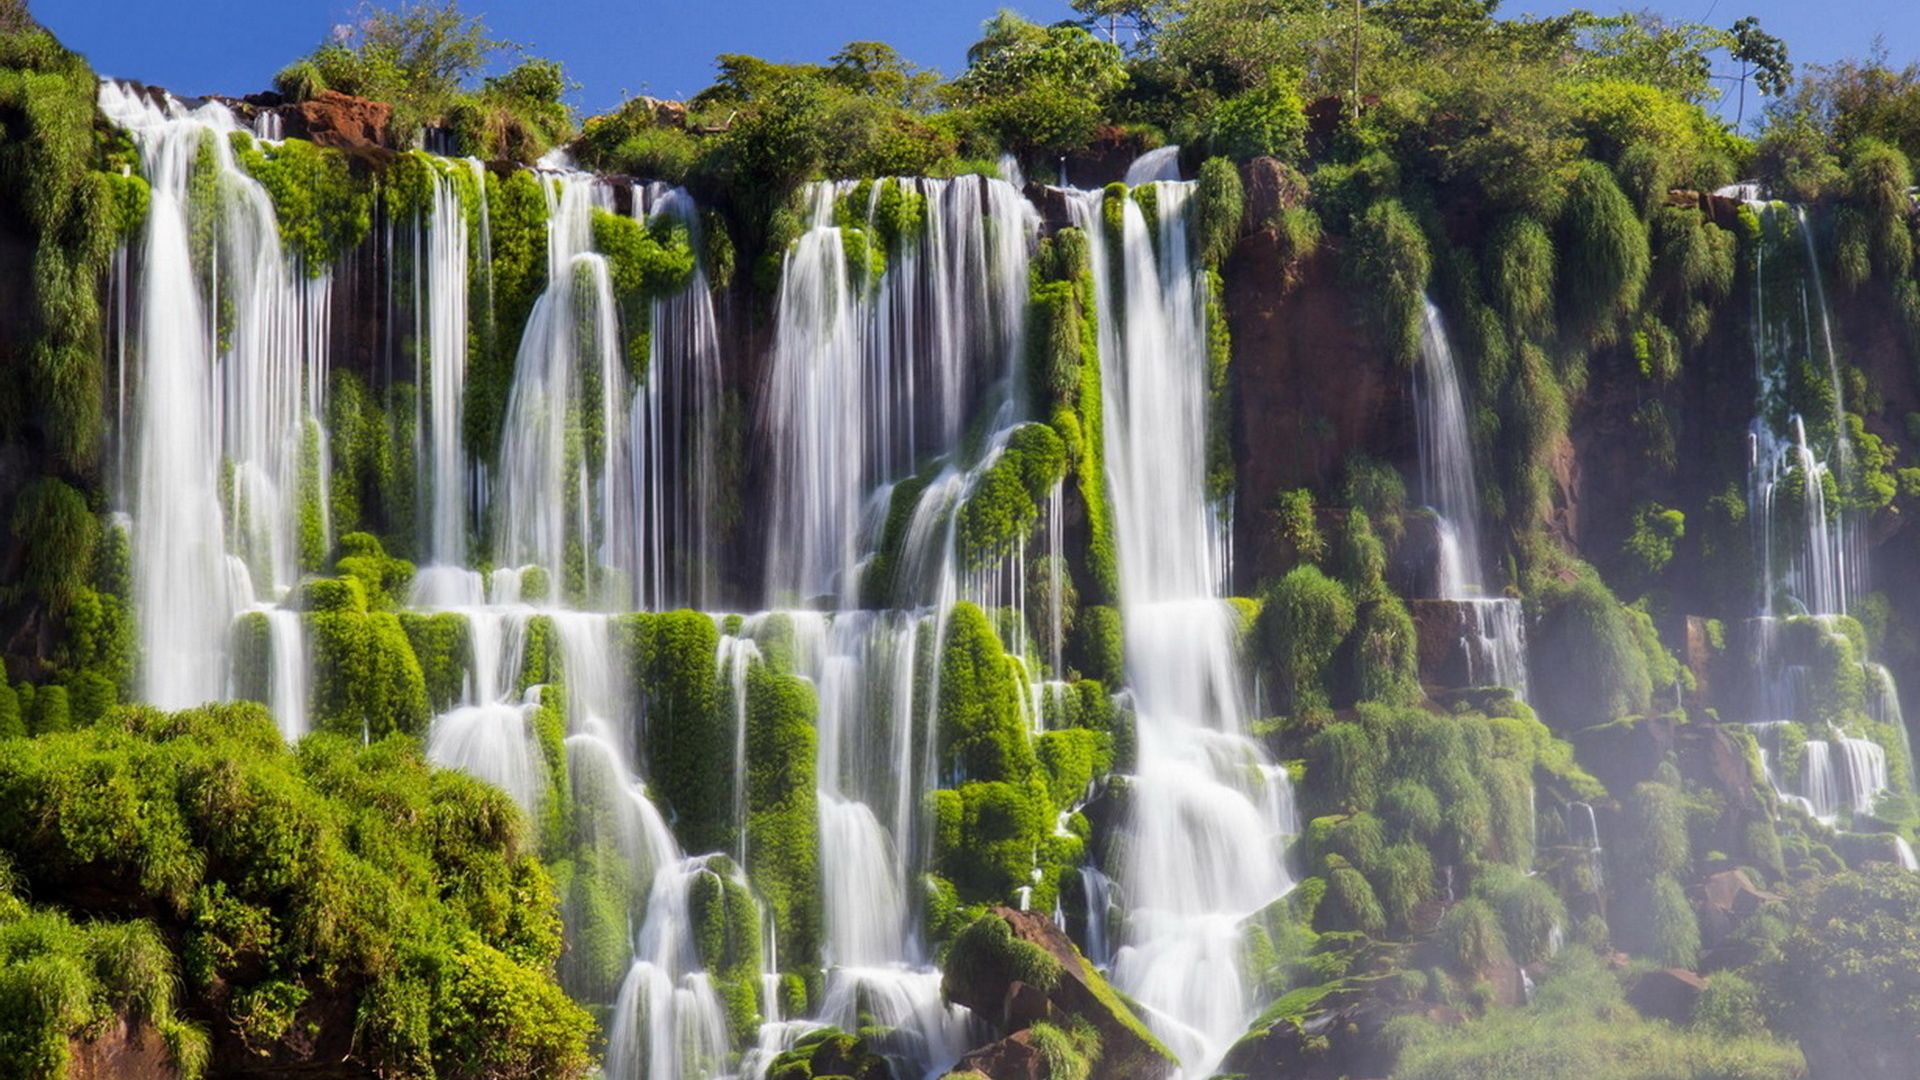 The Iguaçu Falls